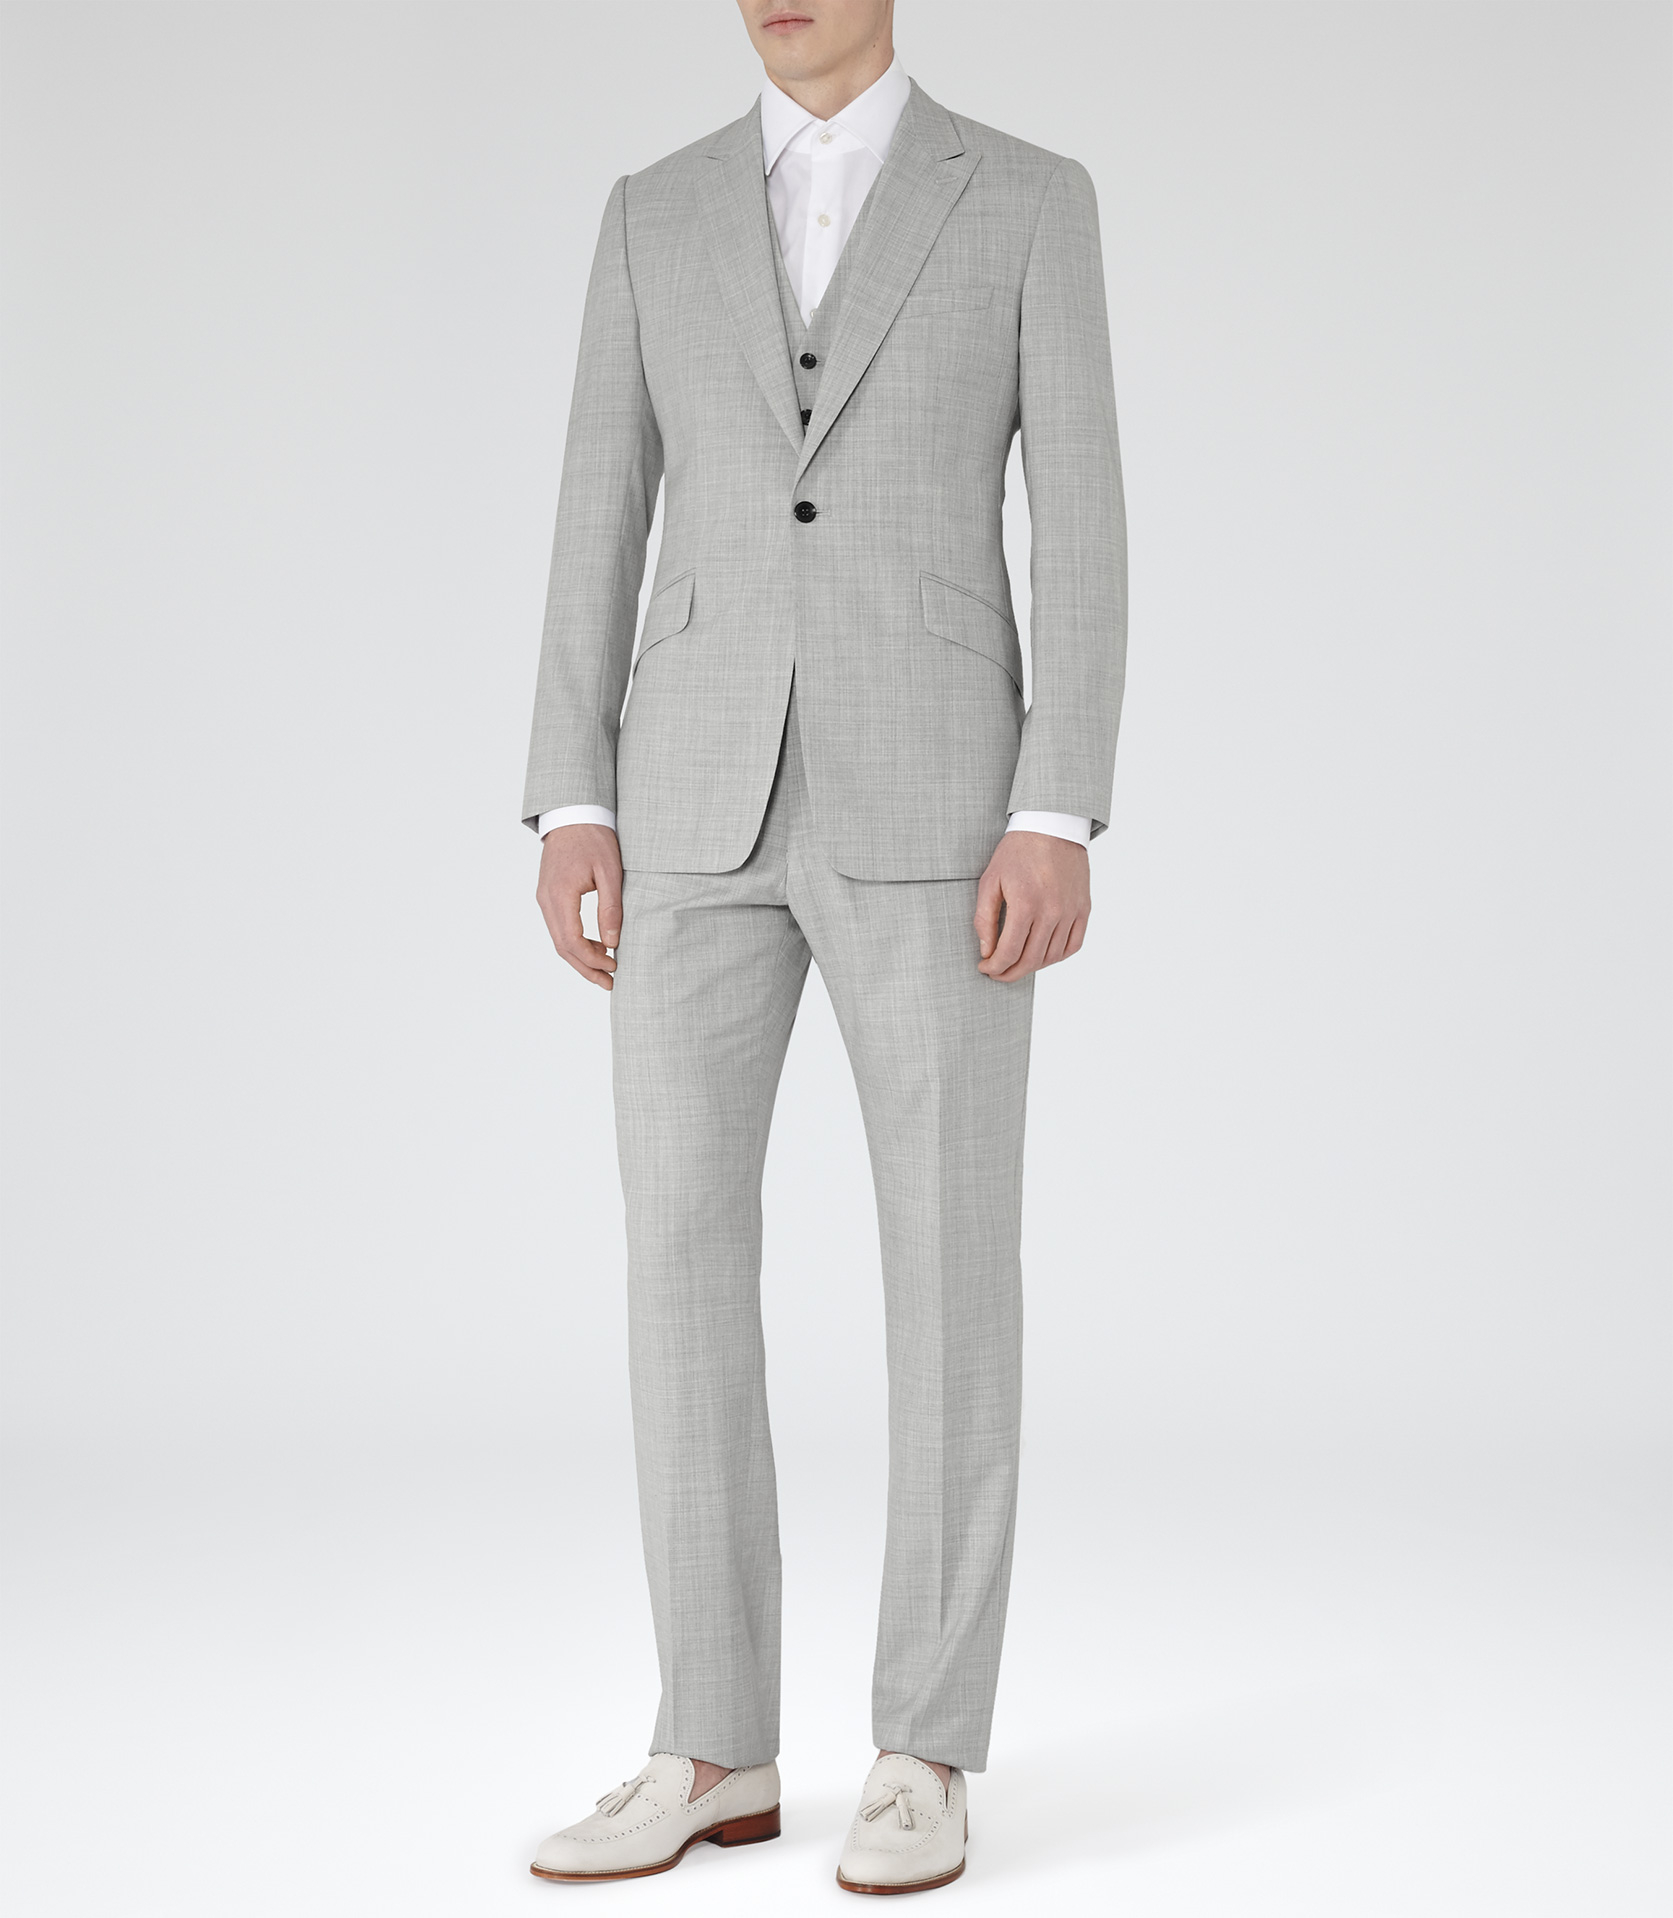 Lyst - Reiss Garda Peak Lapel Three Piece Suit in Gray for Men